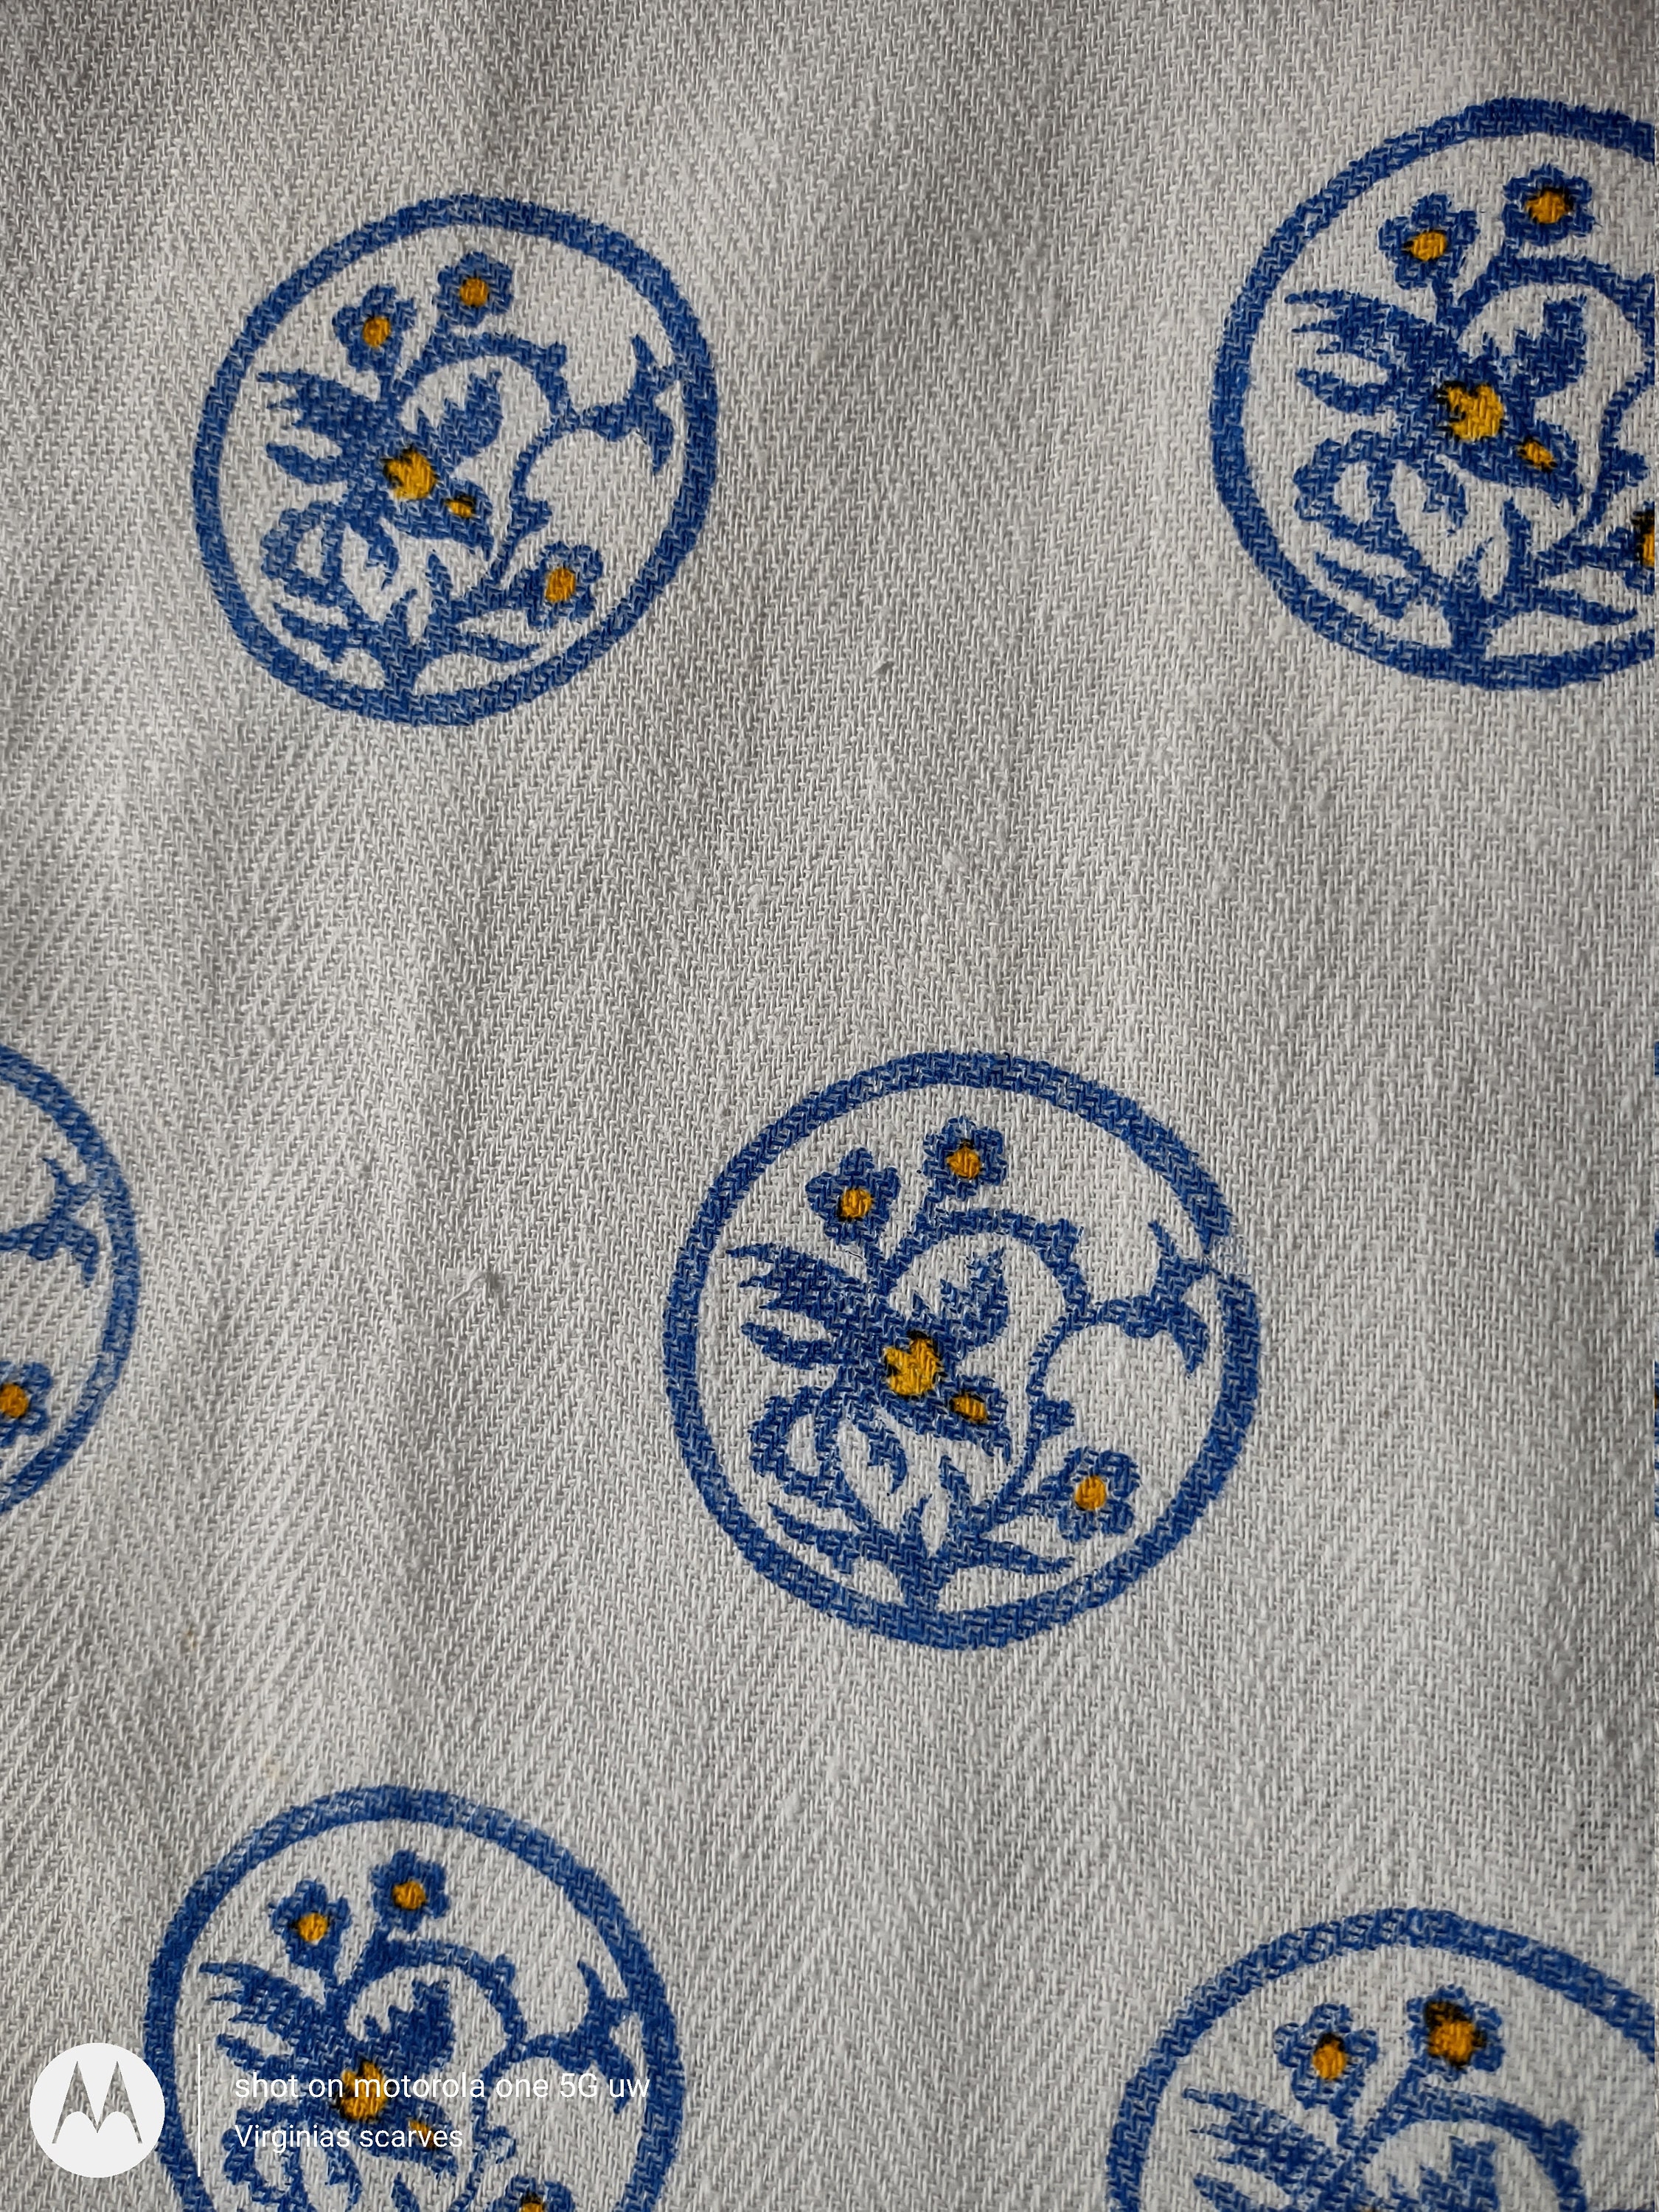 Bee Block-Printed Kitchen Towel – Querida Designs